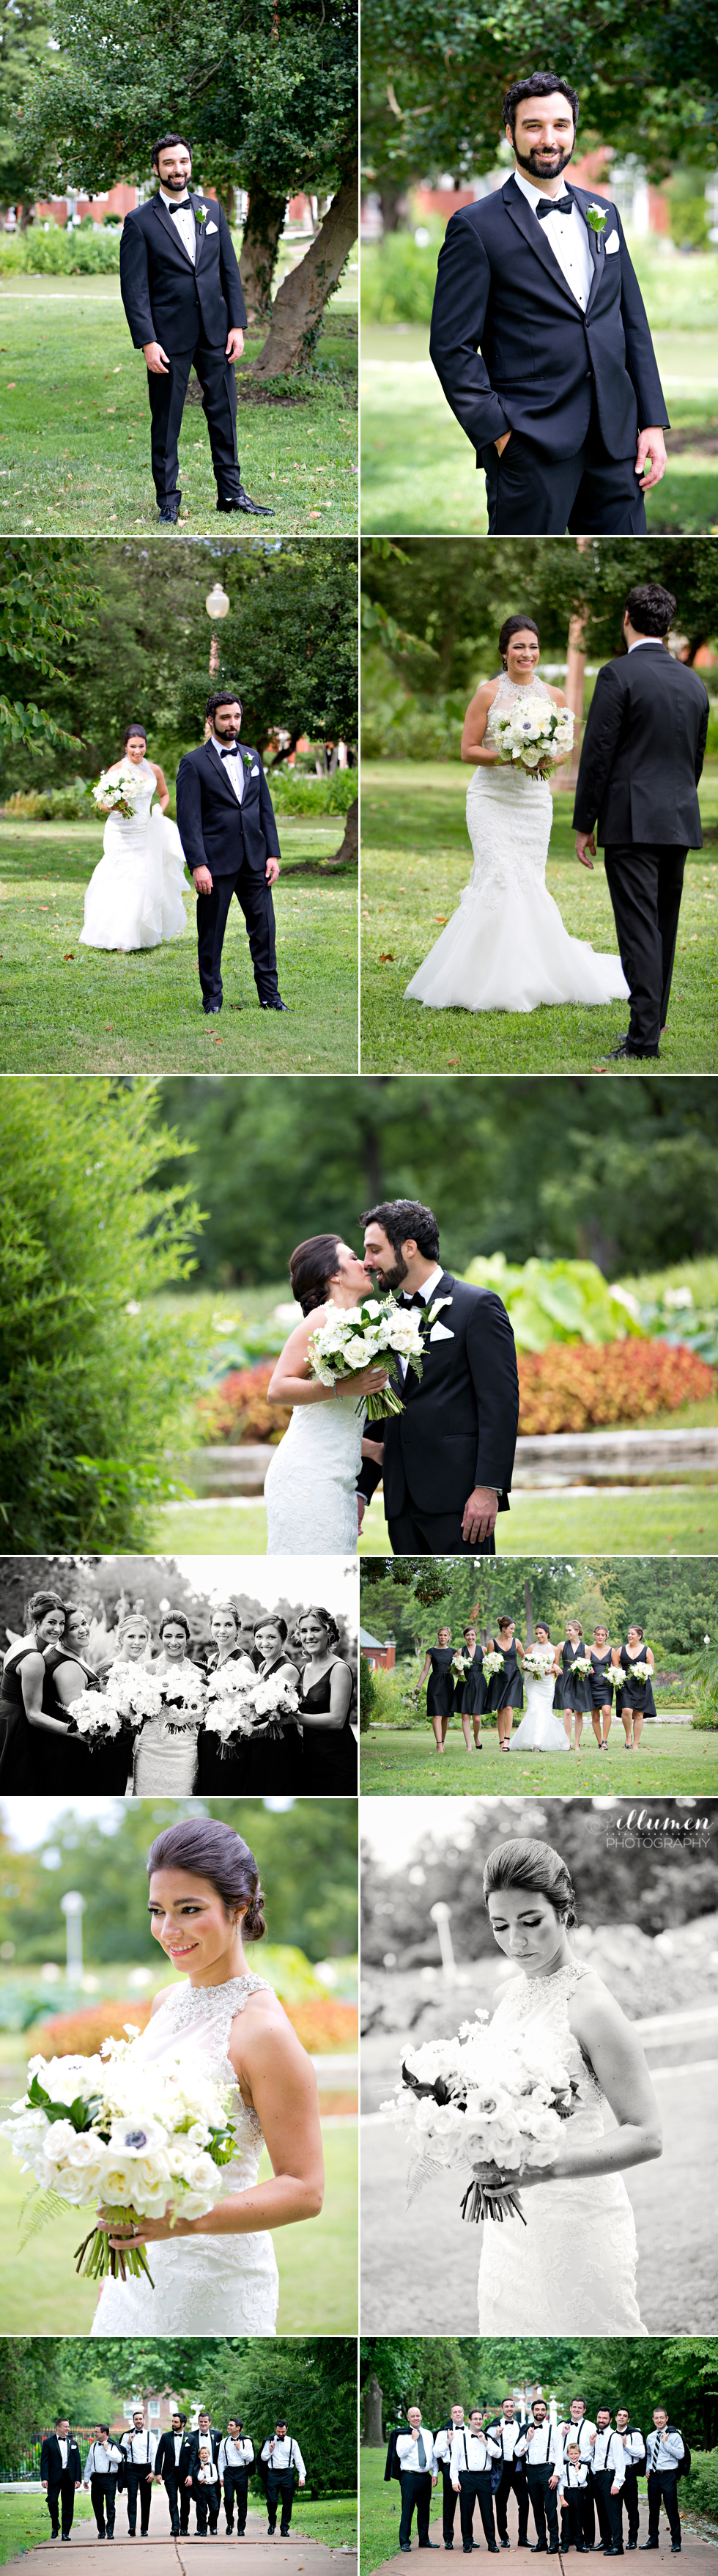 St. Louis Engagement & Wedding Photographer; Illumen Photography; www.illumenphotography.com, Illumen Photography, Missouri Botanical Gardens, Tower Grove Park, Parkway Hotel